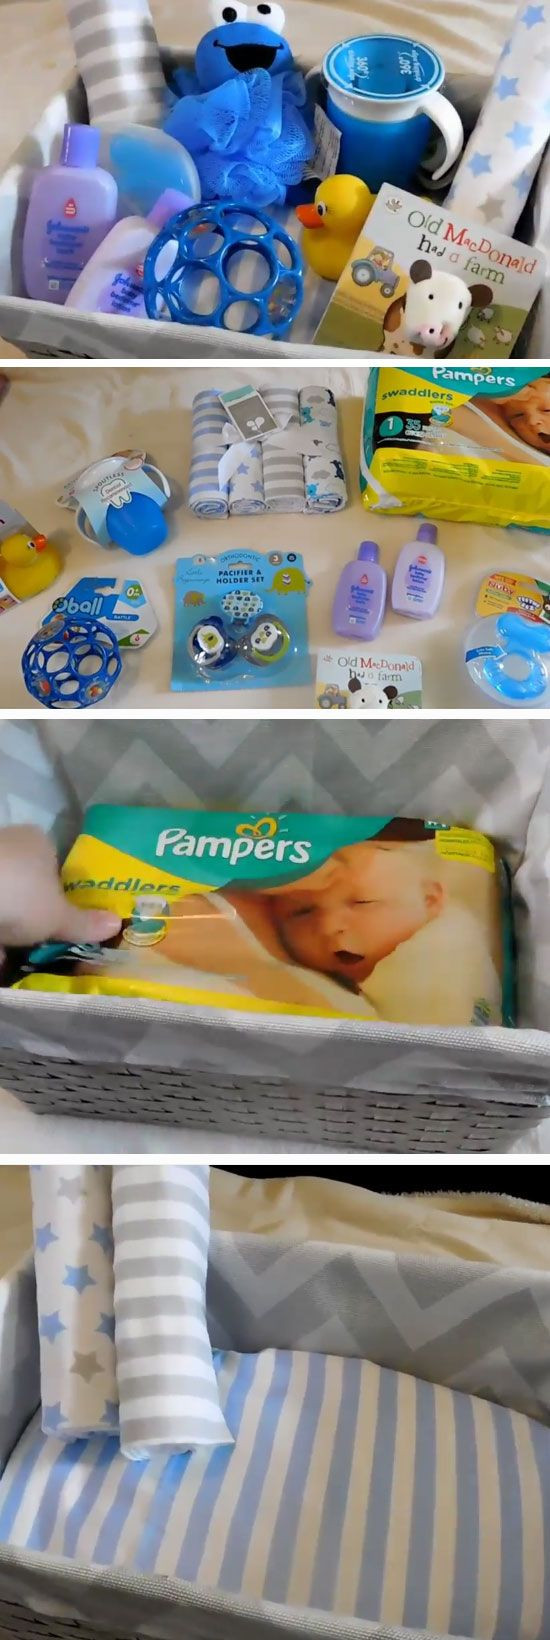 Baby Boy Shower Gift Ideas
 Best 25 Baby t baskets ideas on Pinterest